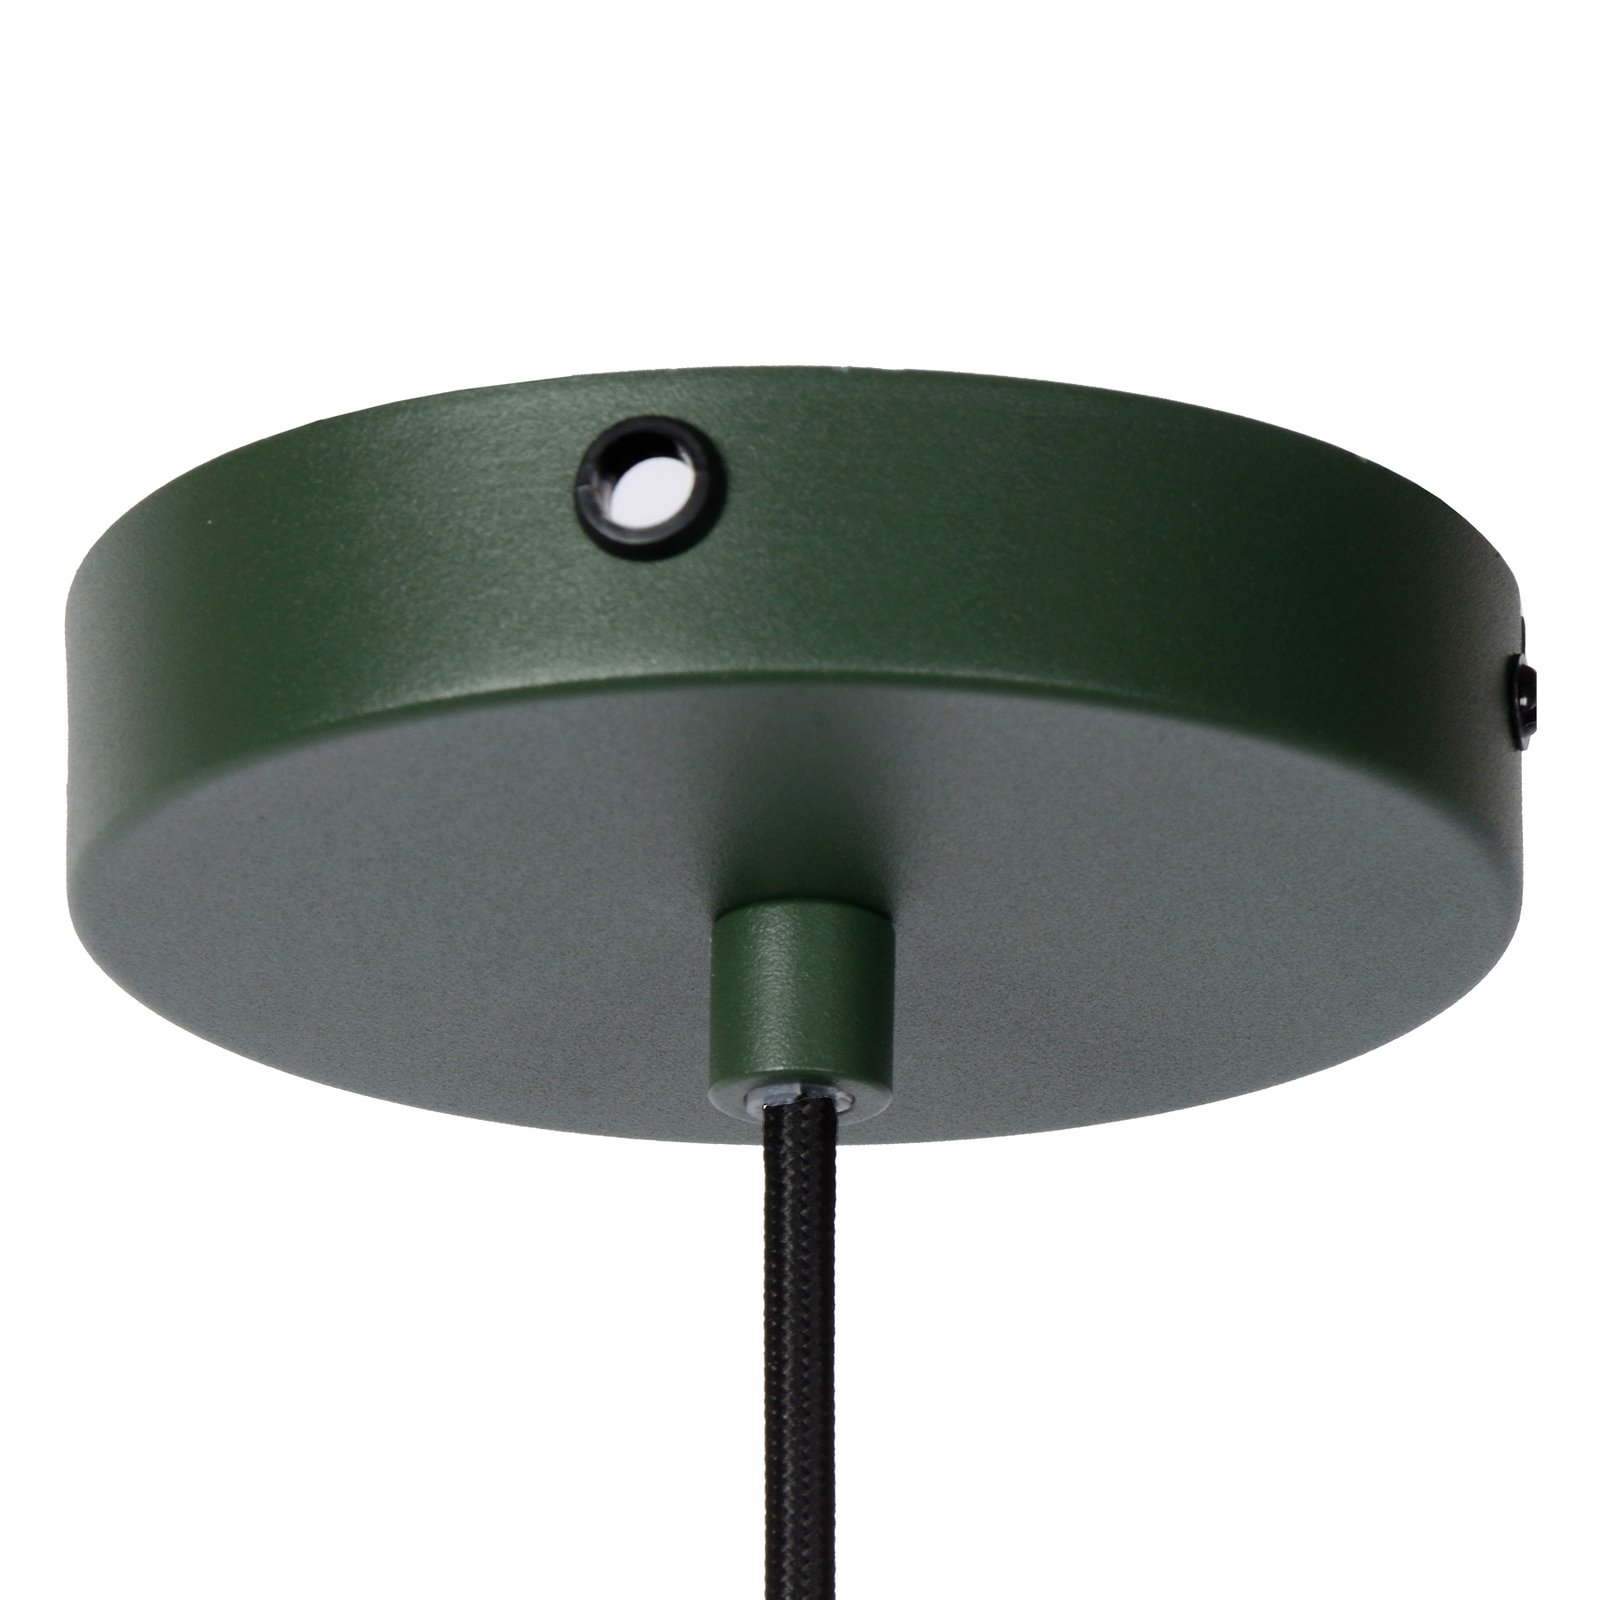 Siemon pendant light made of steel, Ø 40 cm, green